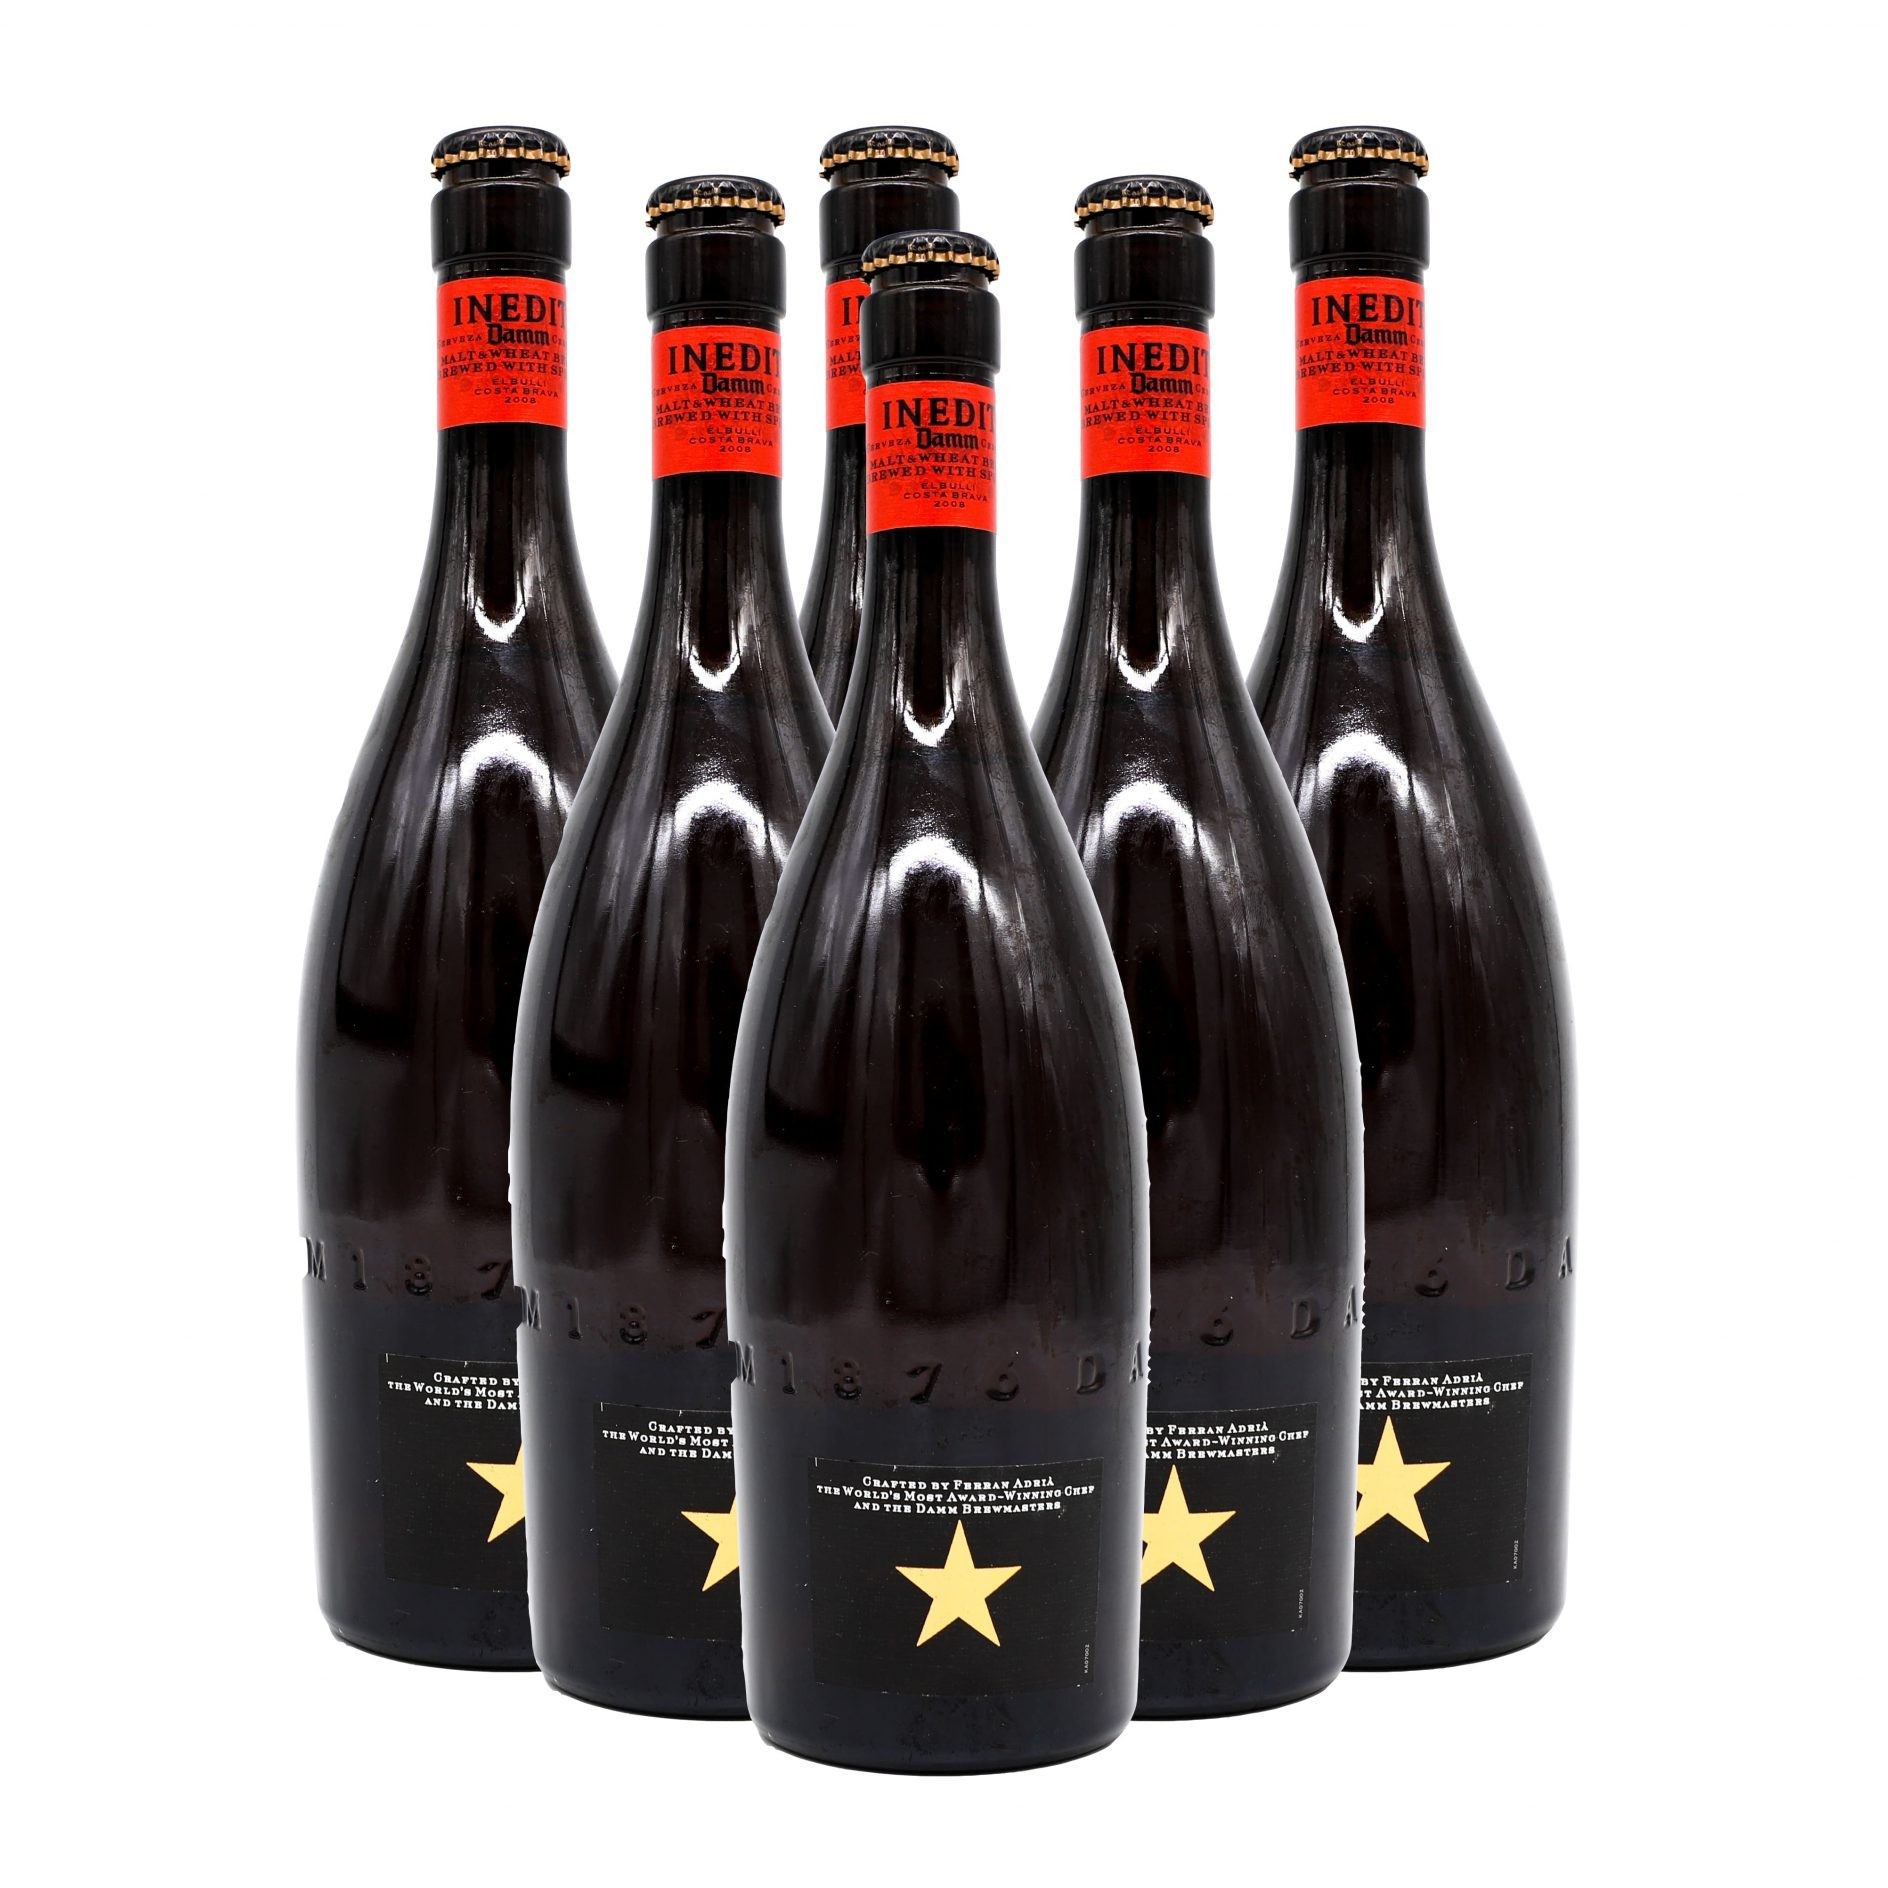 Estrella Damm Inedit Beer 6 x 750ml Bottles